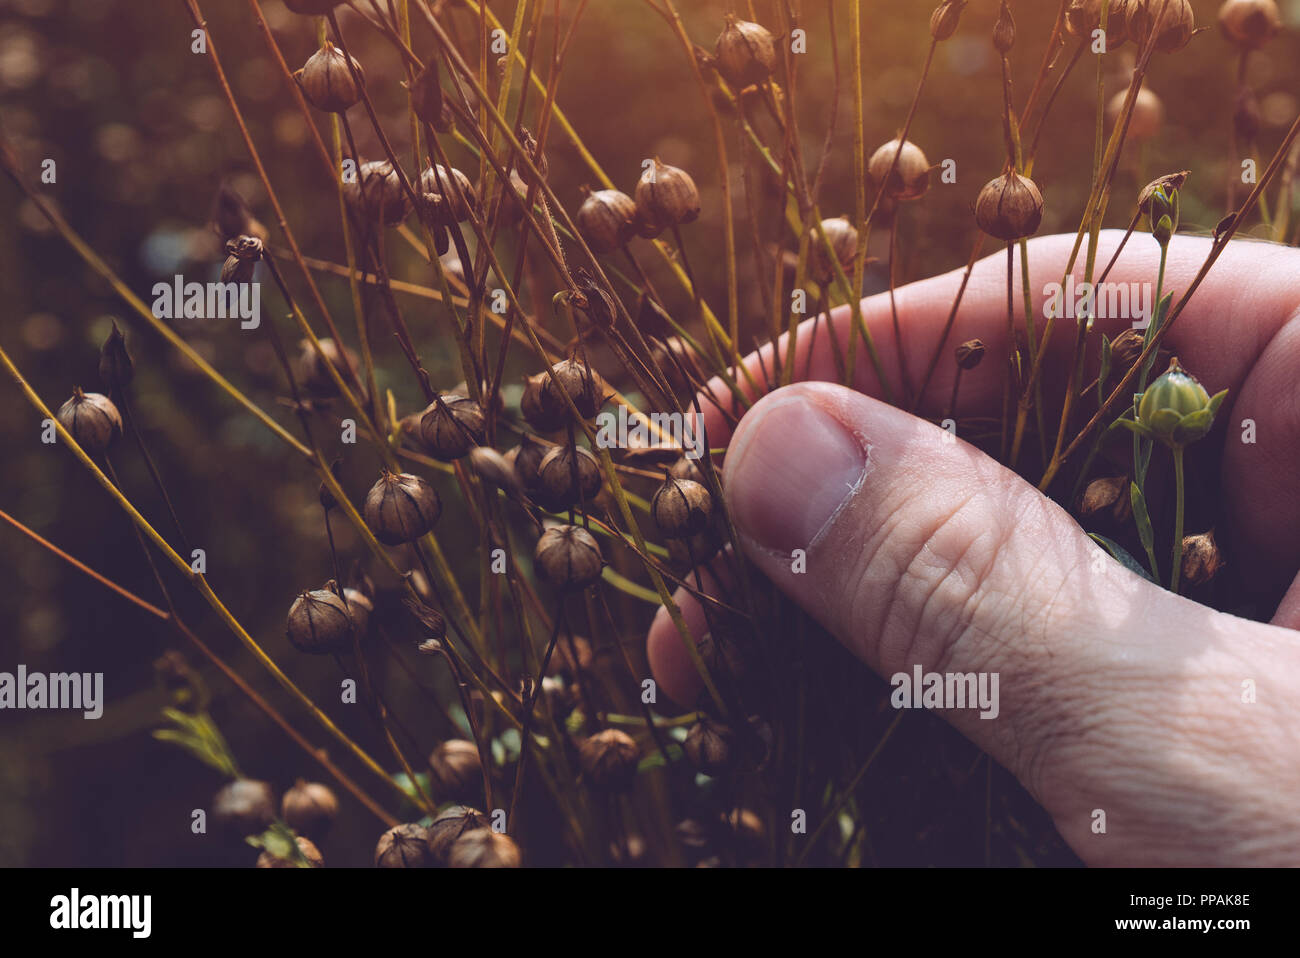 Farmer examining ripe flax linseed plants in field Stock Photo